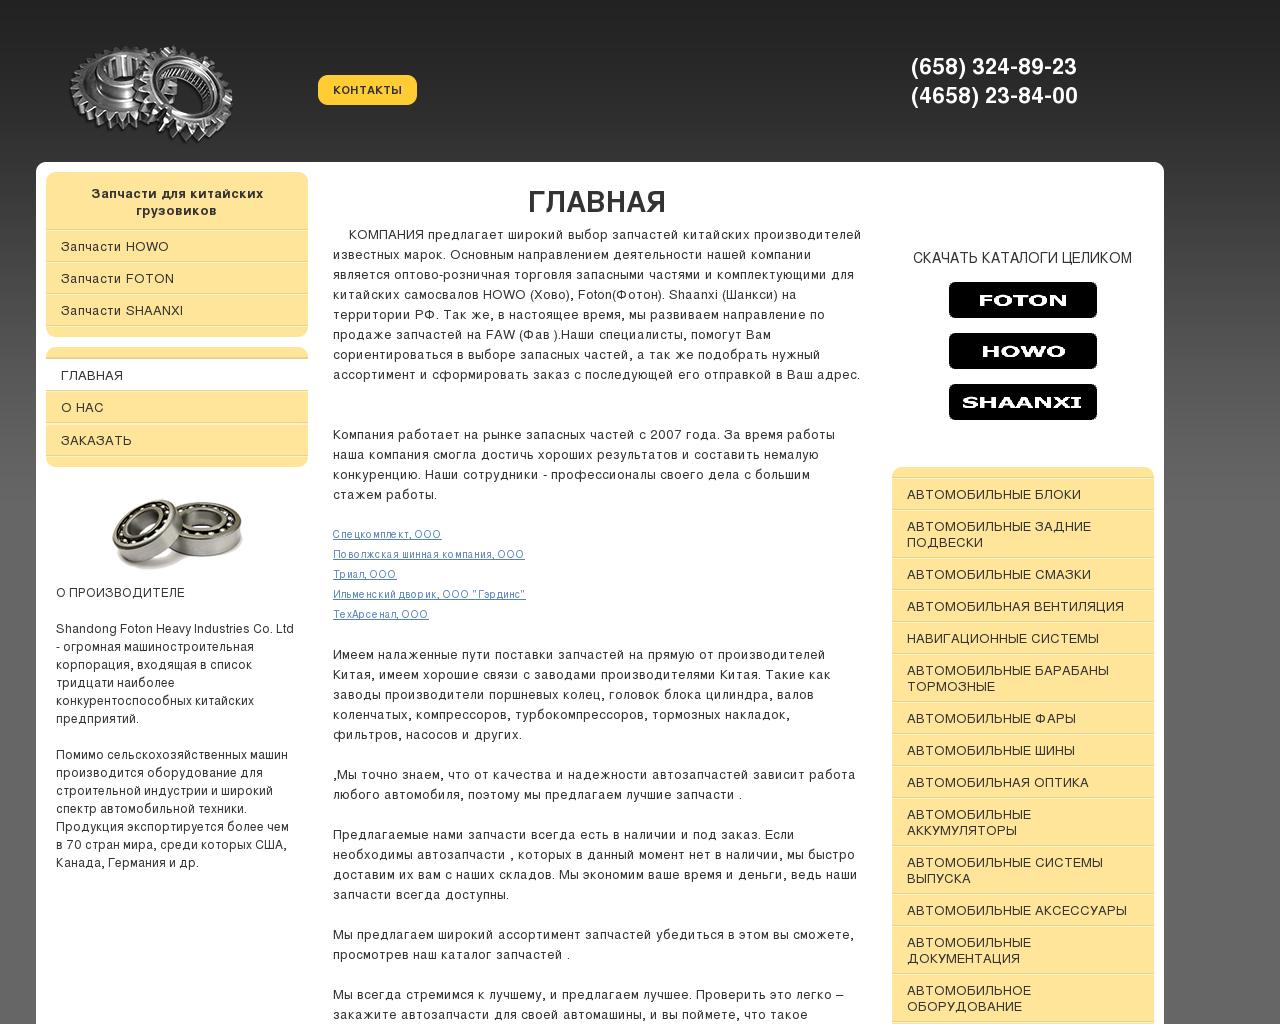 Изображение сайта alatex-ingredients.ru в разрешении 1280x1024